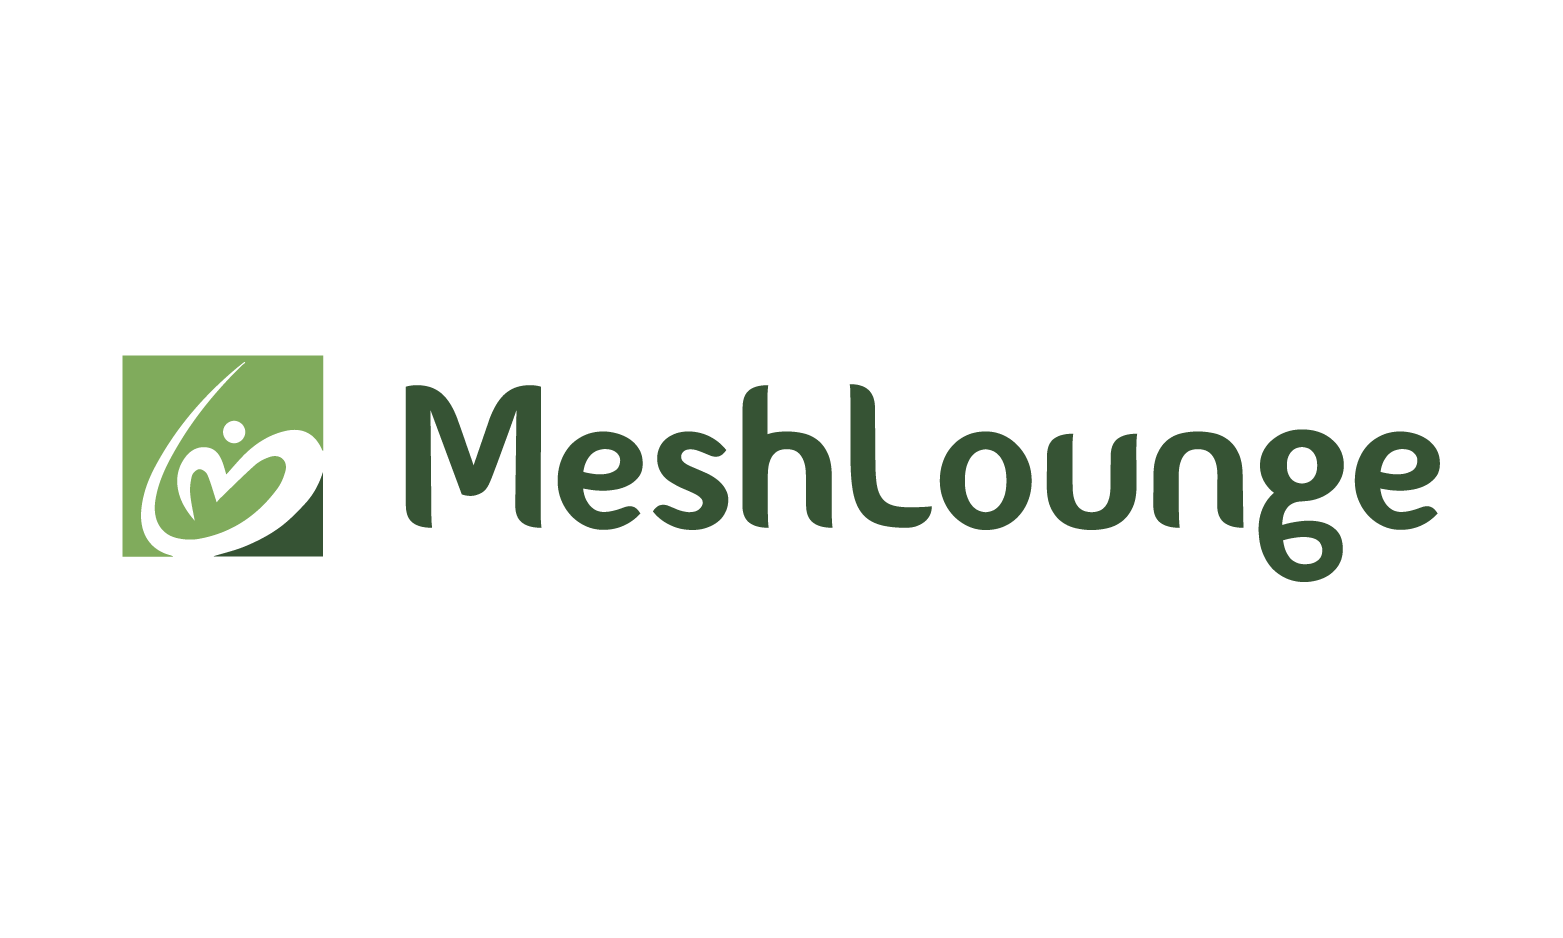 MeshLounge.com - Creative brandable domain for sale